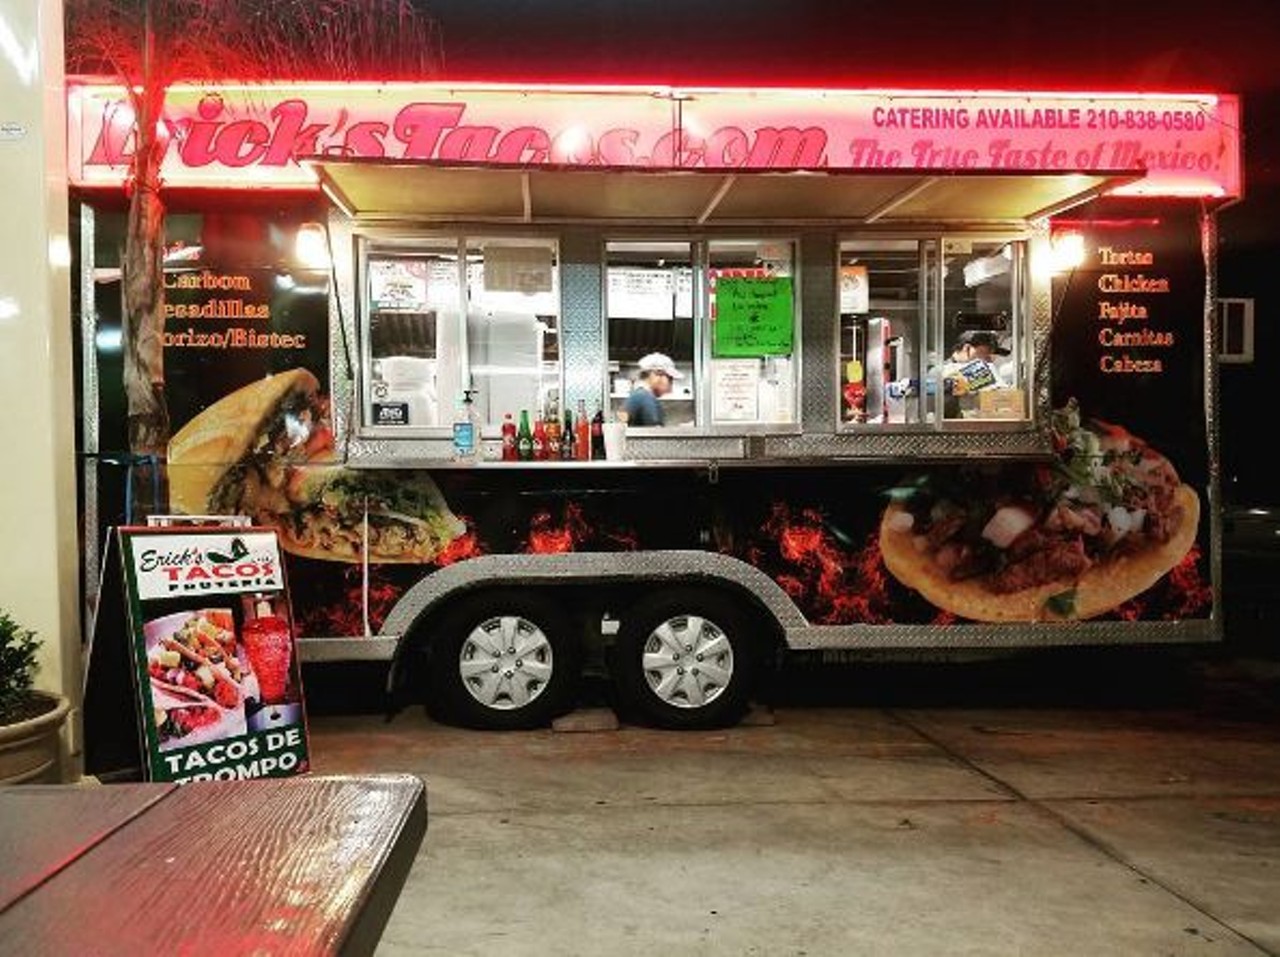 Erick’s Tacos
12715 Nacogdoches Road, (210) 590-0994, erickstacos.webs.com
Taco trucks are great, but a taco truck that stays open until 4 a.m. is heaven sent.
Photo via Instagram, rickisslick45